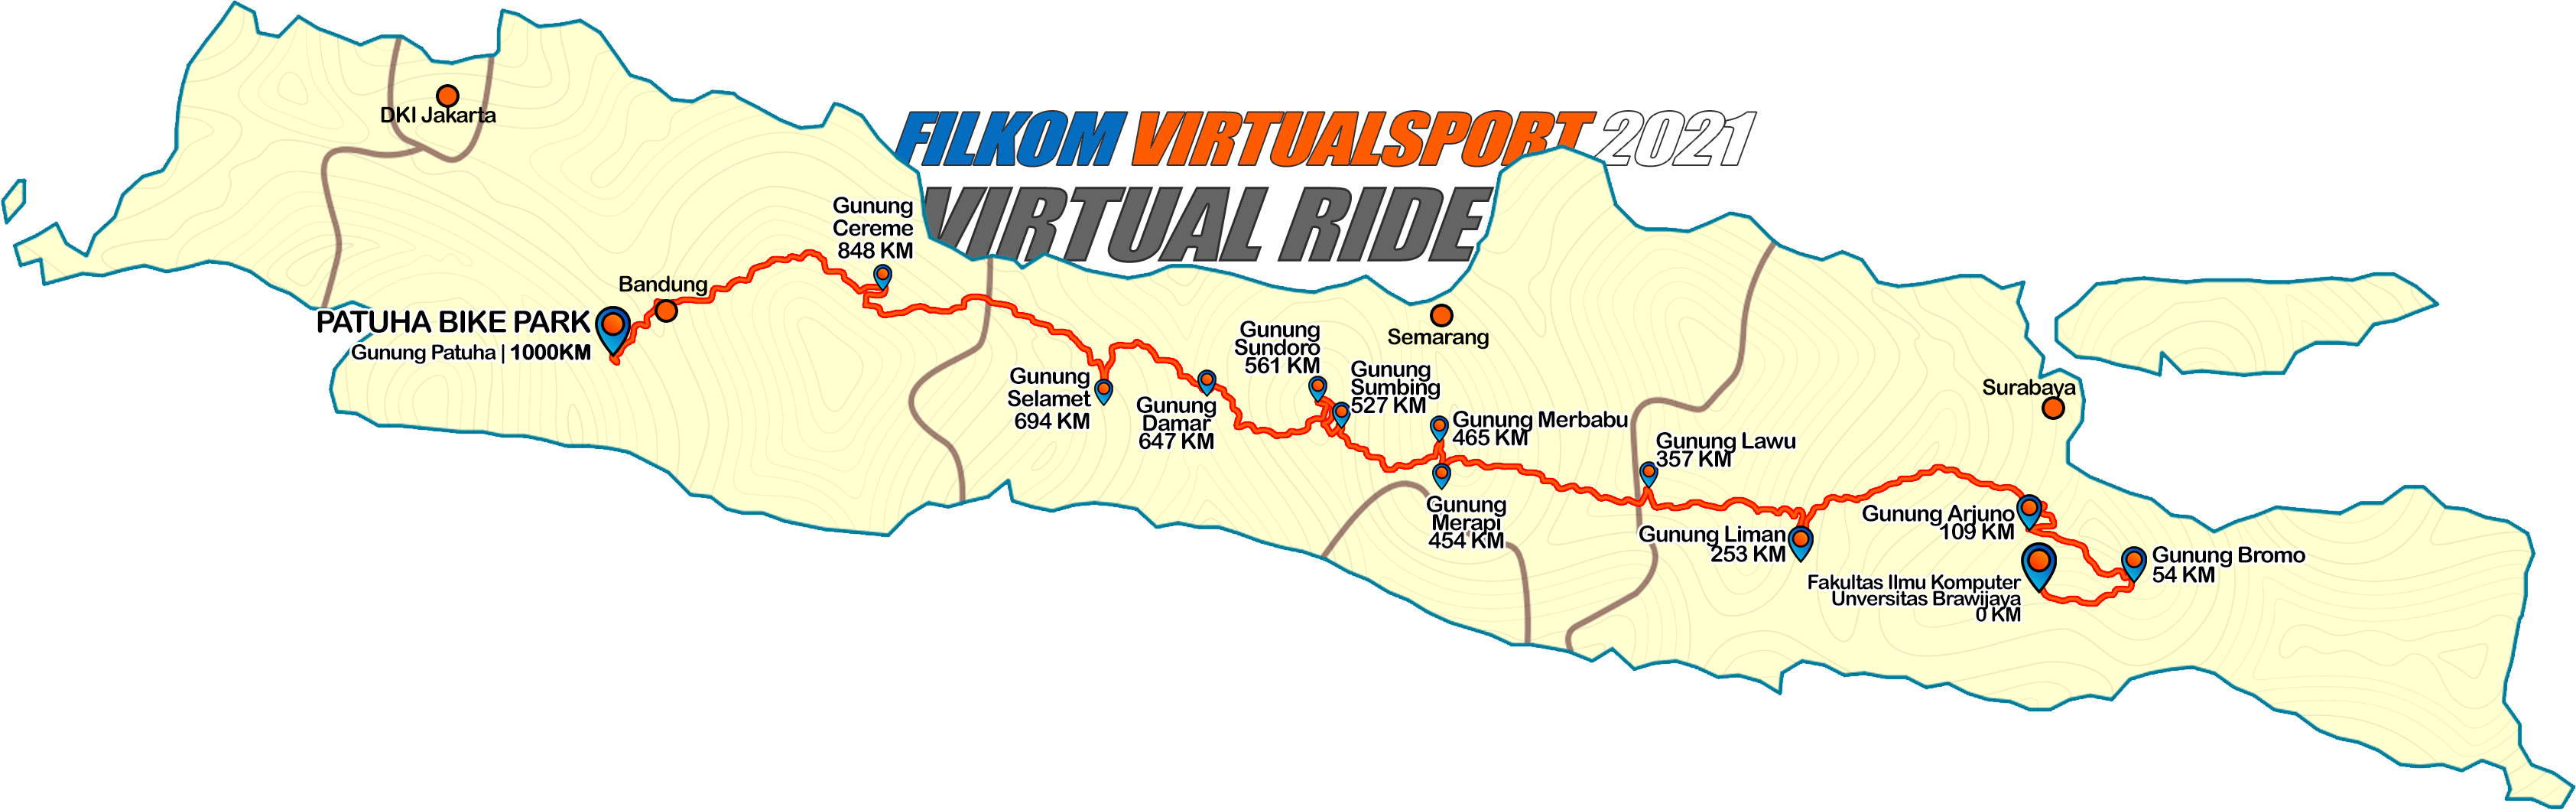 FILKOM Virtual Sport